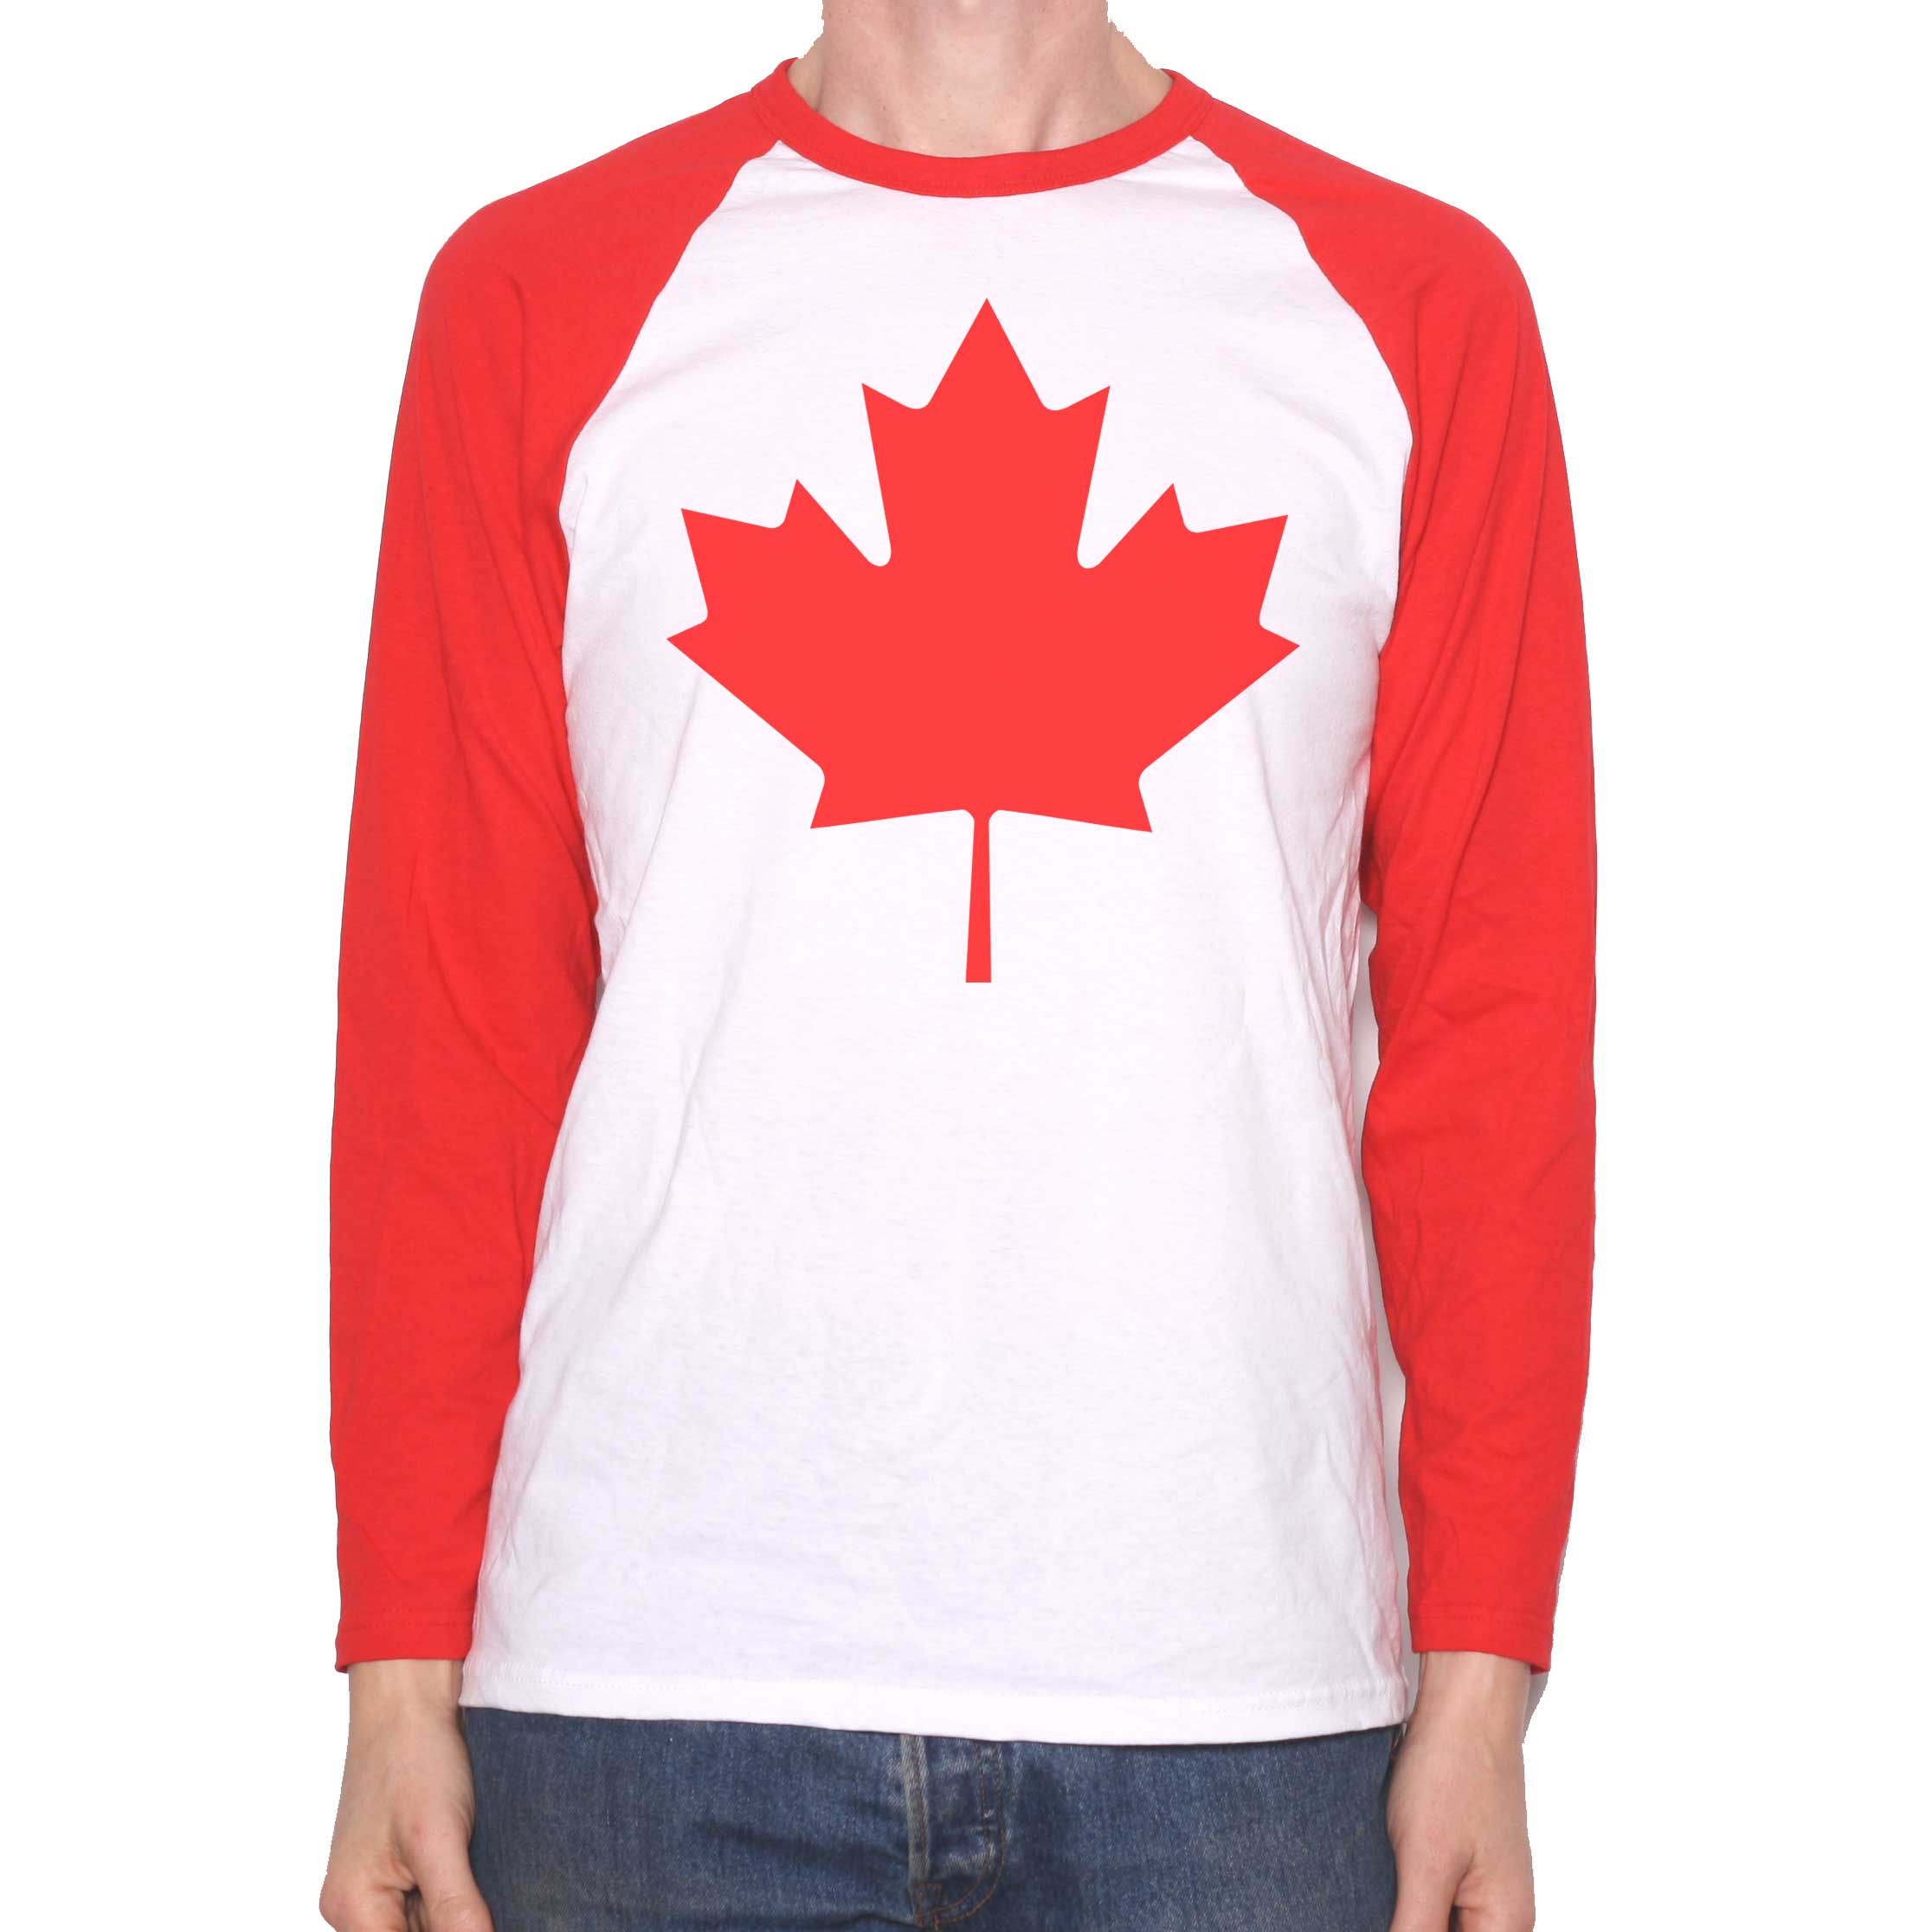 Canadian Flag T Shirt - Long Sleeve Red Baseball Style Canada Maple Leaf